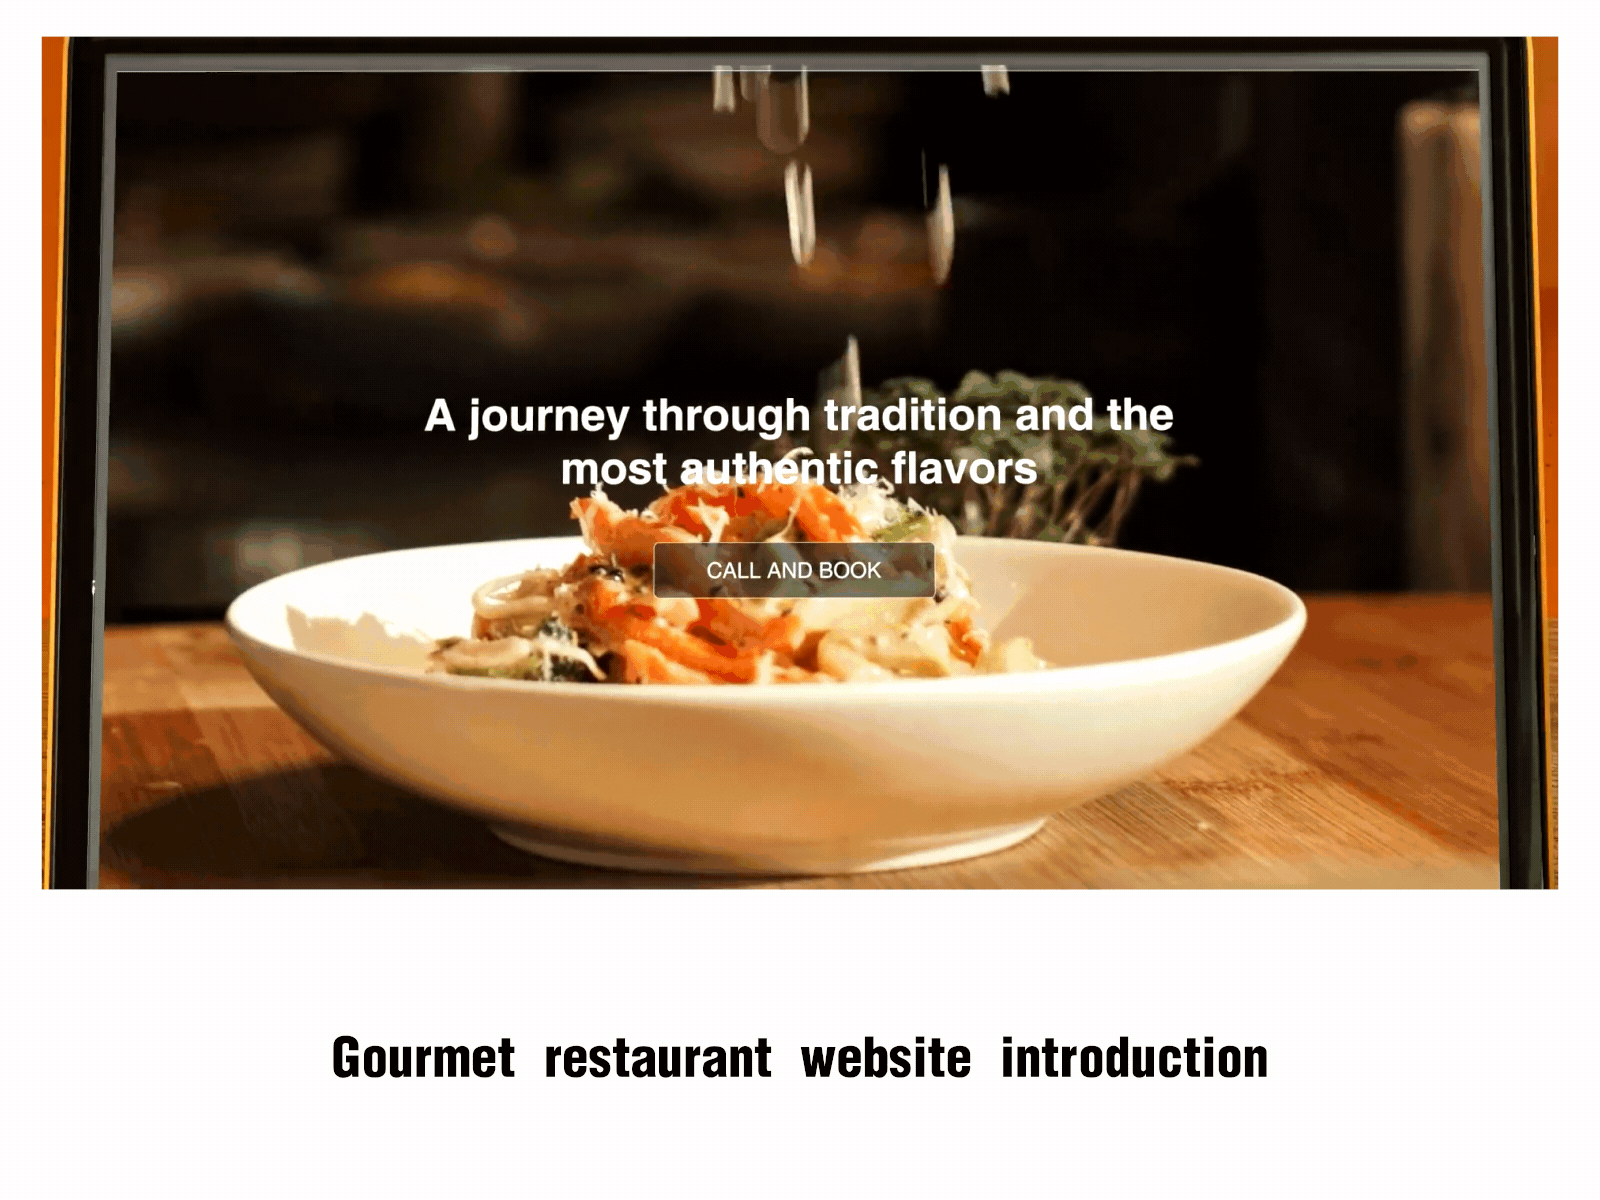 Gourmet restaurant website introduction